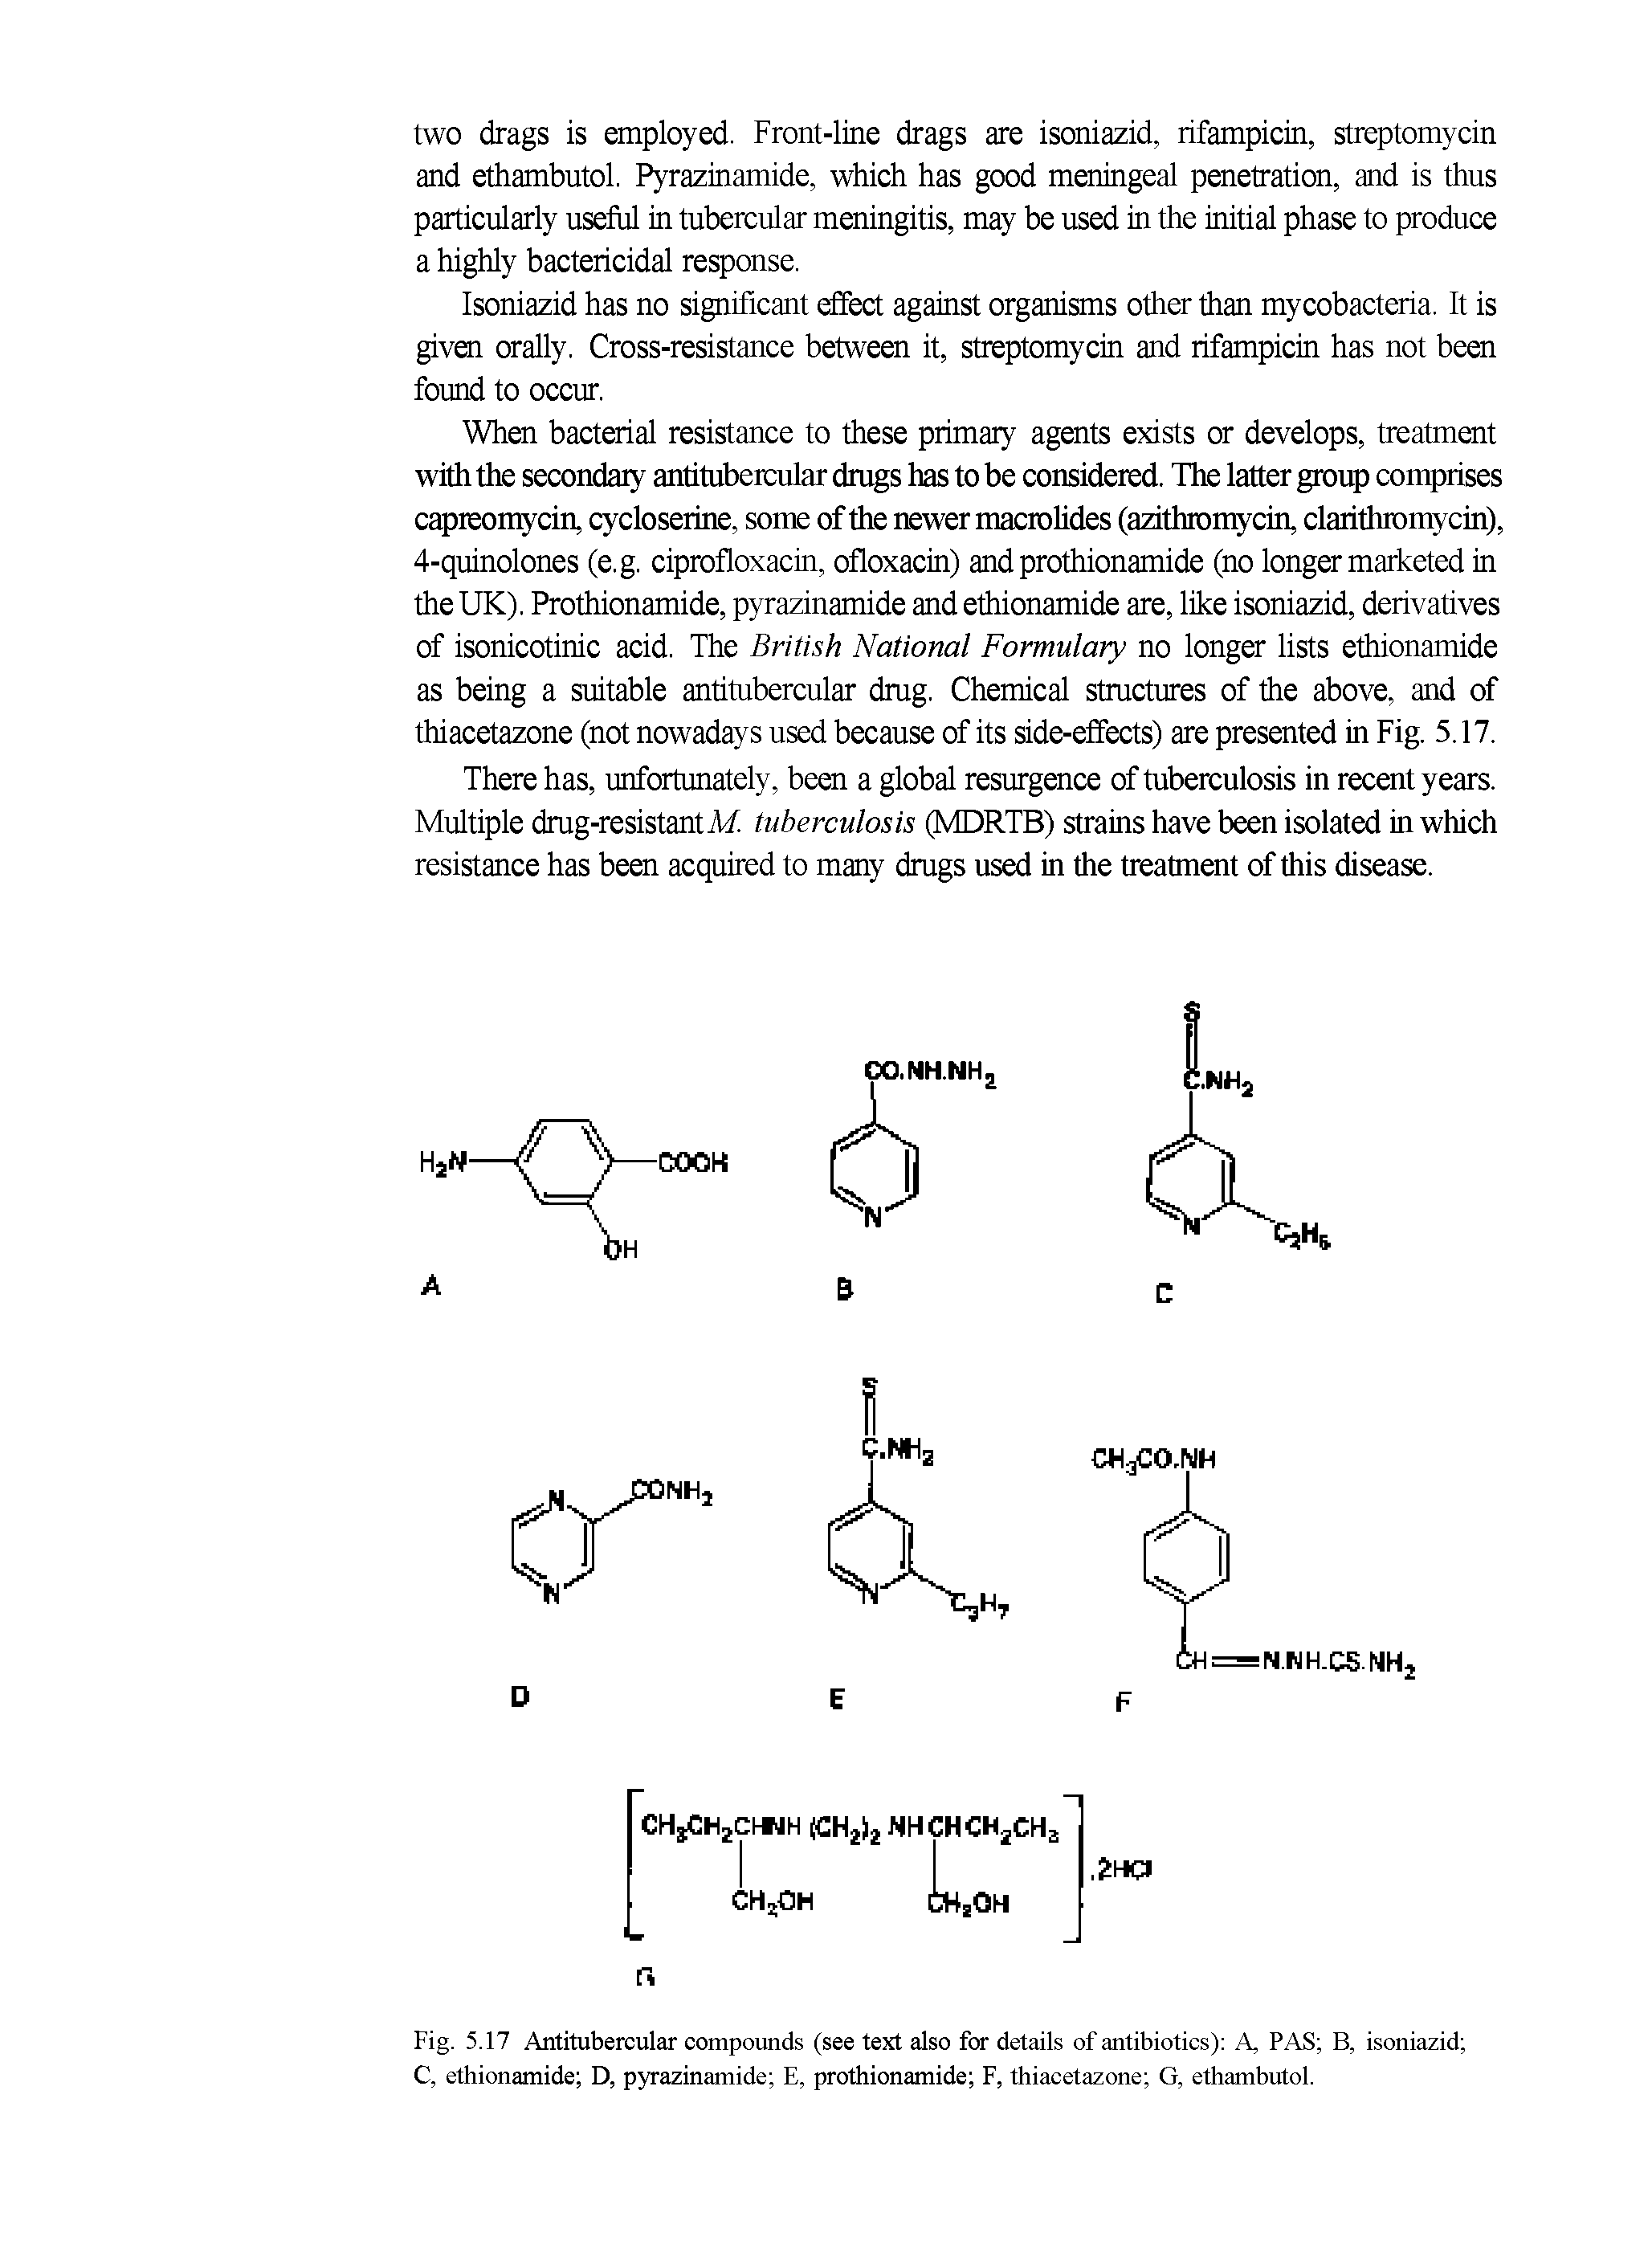 Fig. 5.17 Antitubercular compounds (see text also for details of antibiotics) A, PAS B, isoniazid C, ethionamide D, pyrazinamide E, prothionamide F, thiaeetazone G, ethambutol.